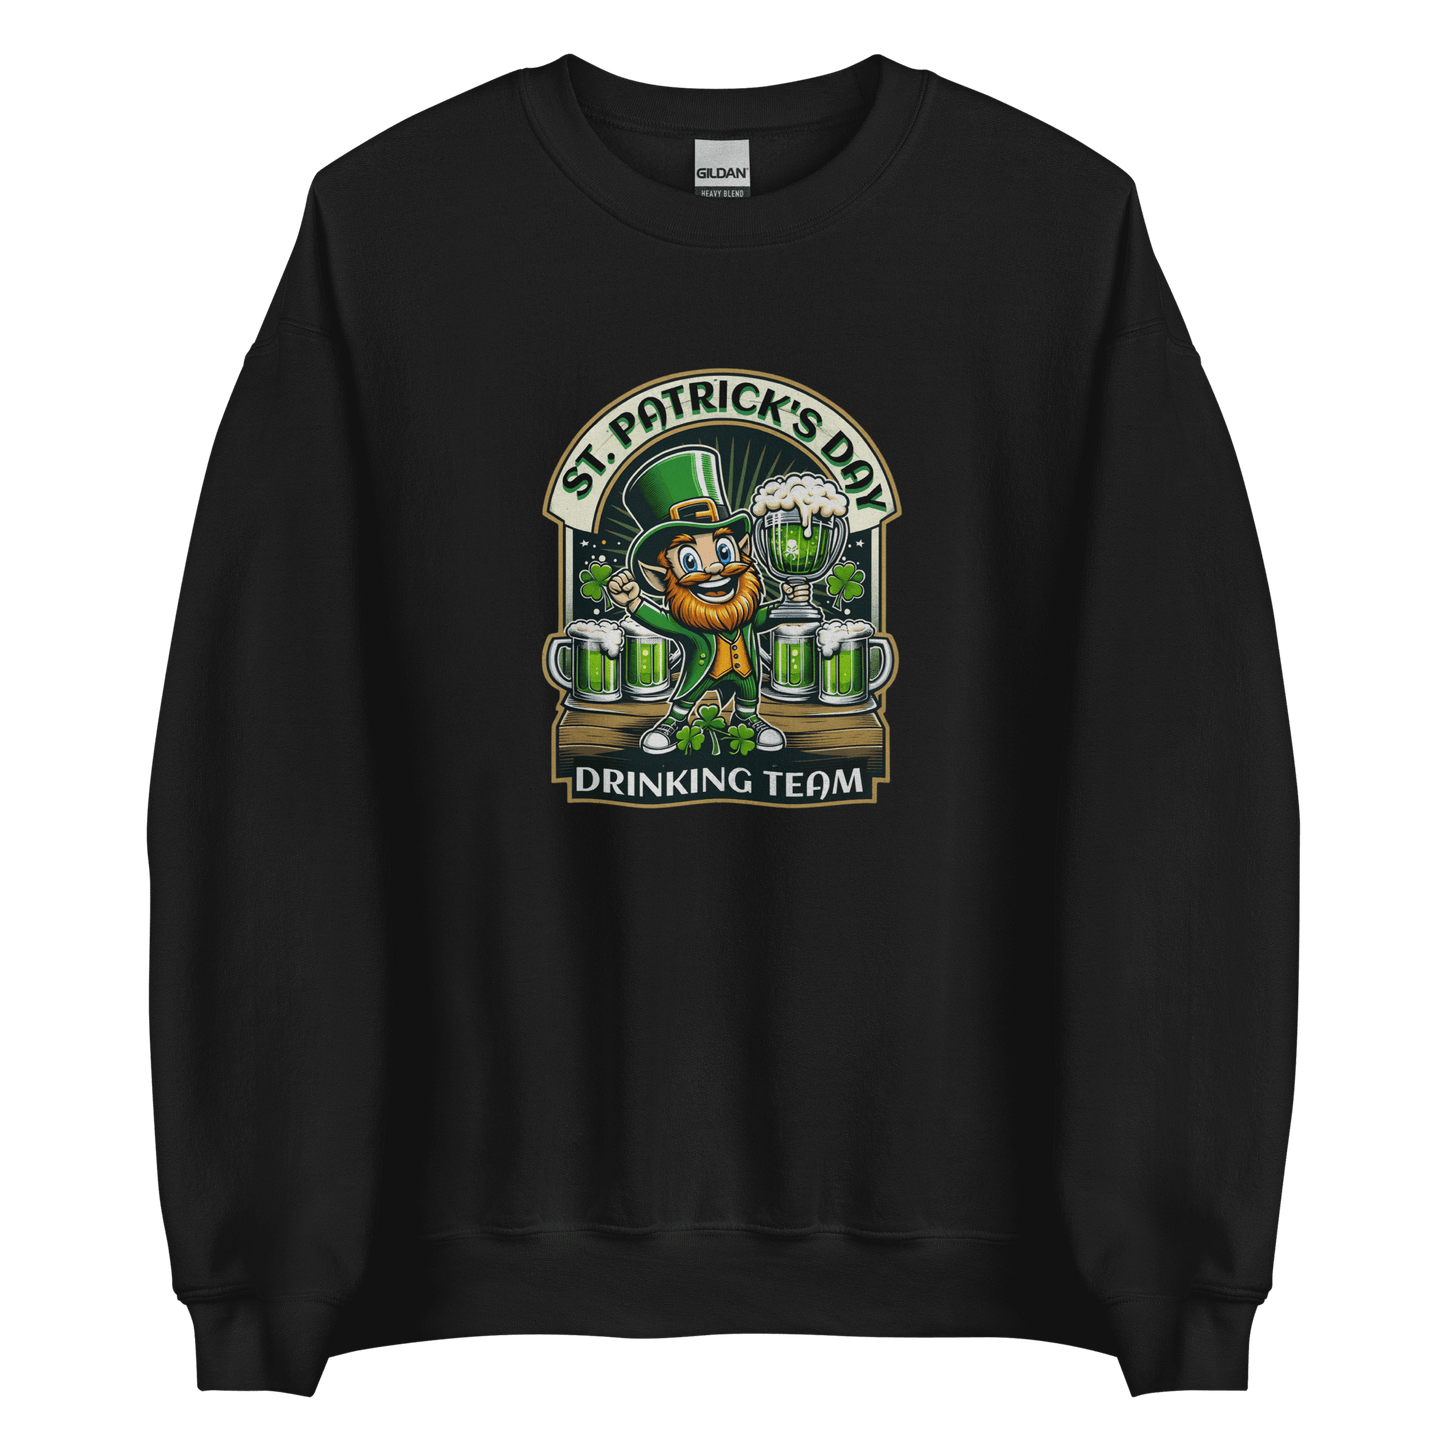 St Patricks Day Drinking Team Sweatshirt